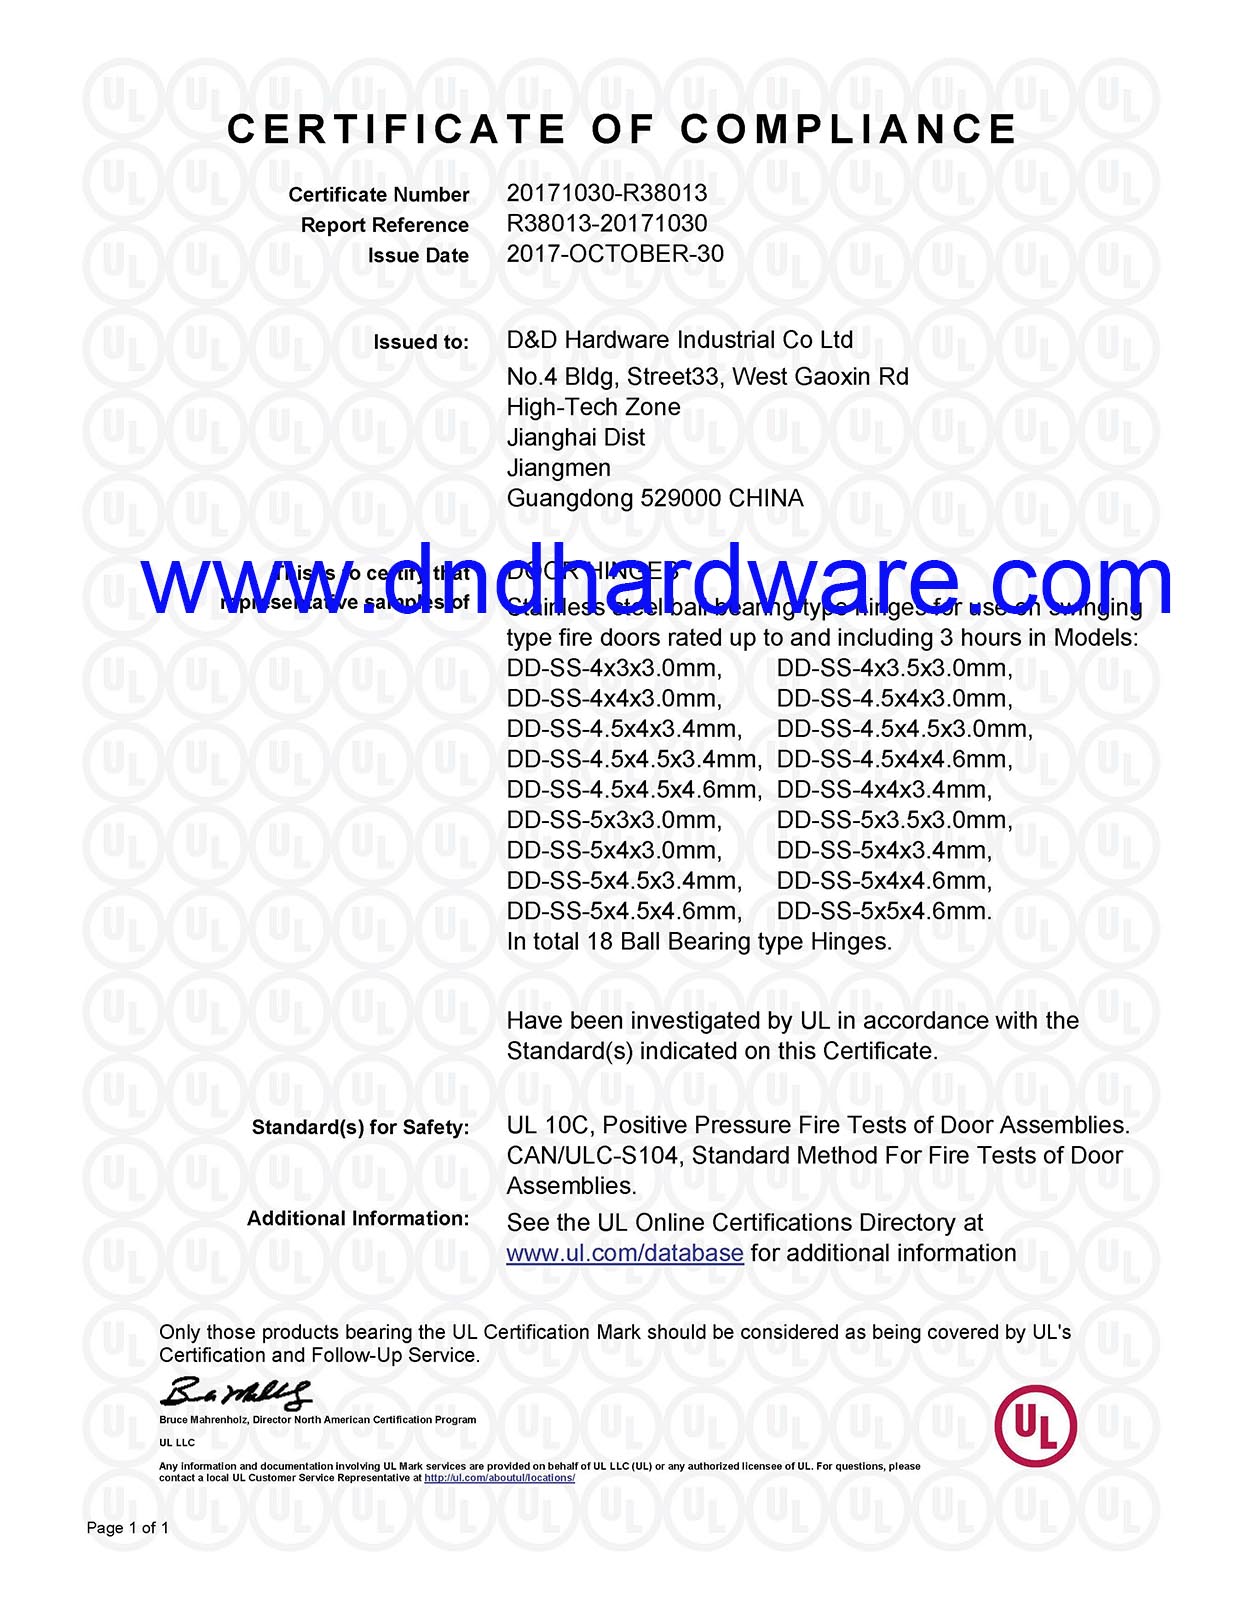 UL Hinge-R38013-D&D Hardware